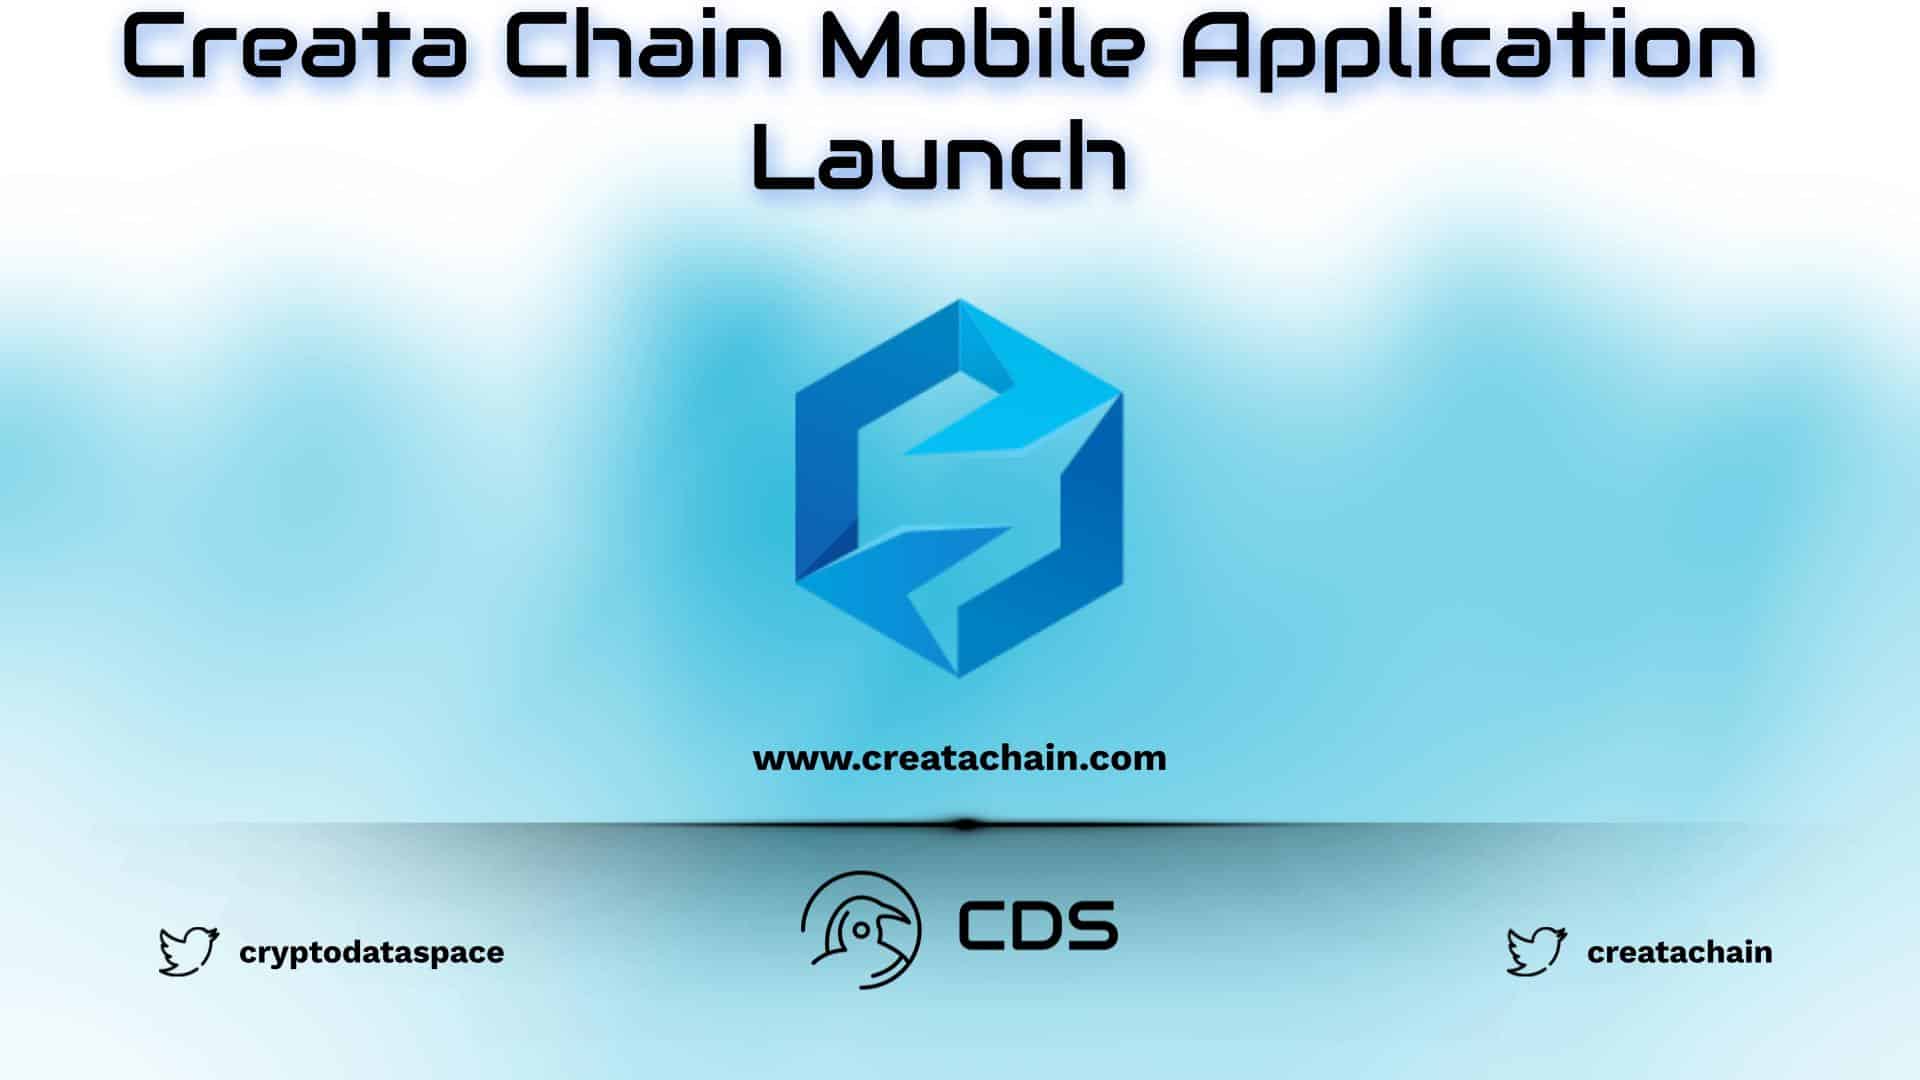 Creata Chain Mobile Application Launch